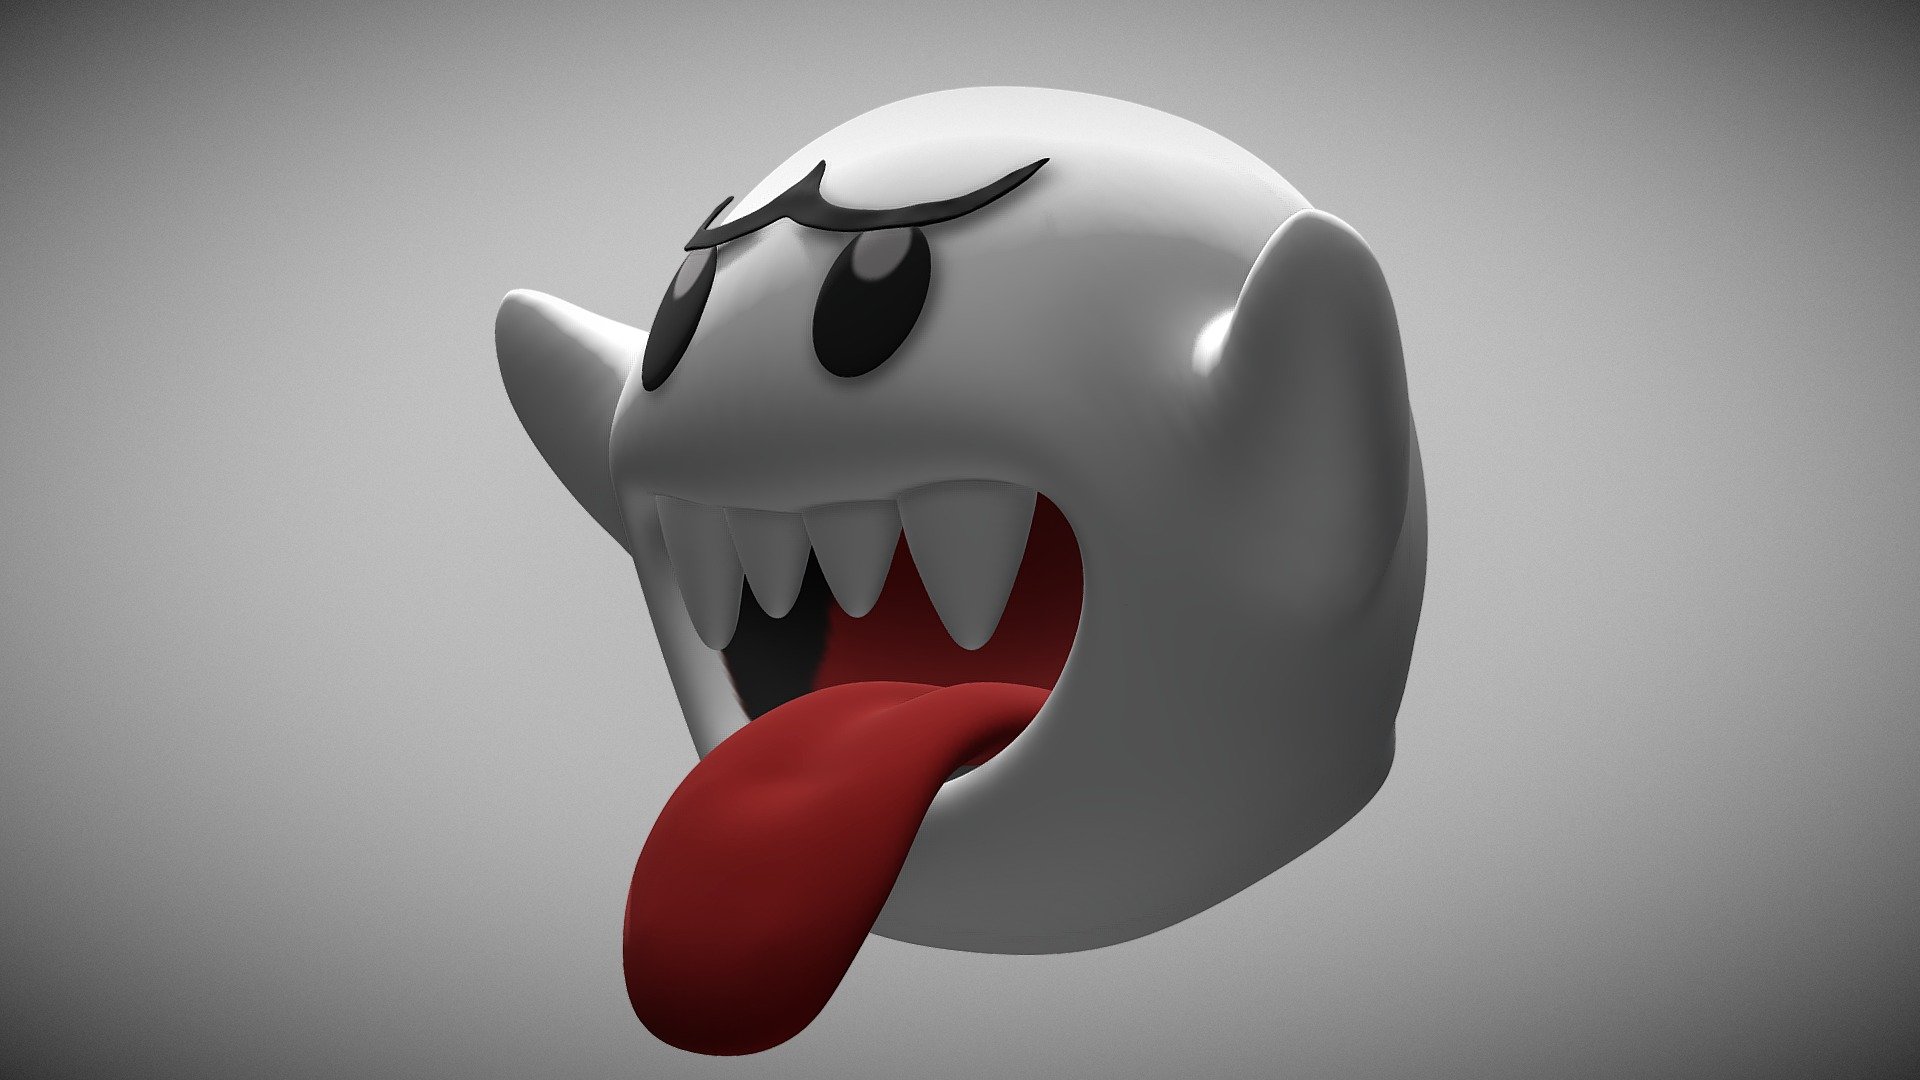 Super Mario - Boo